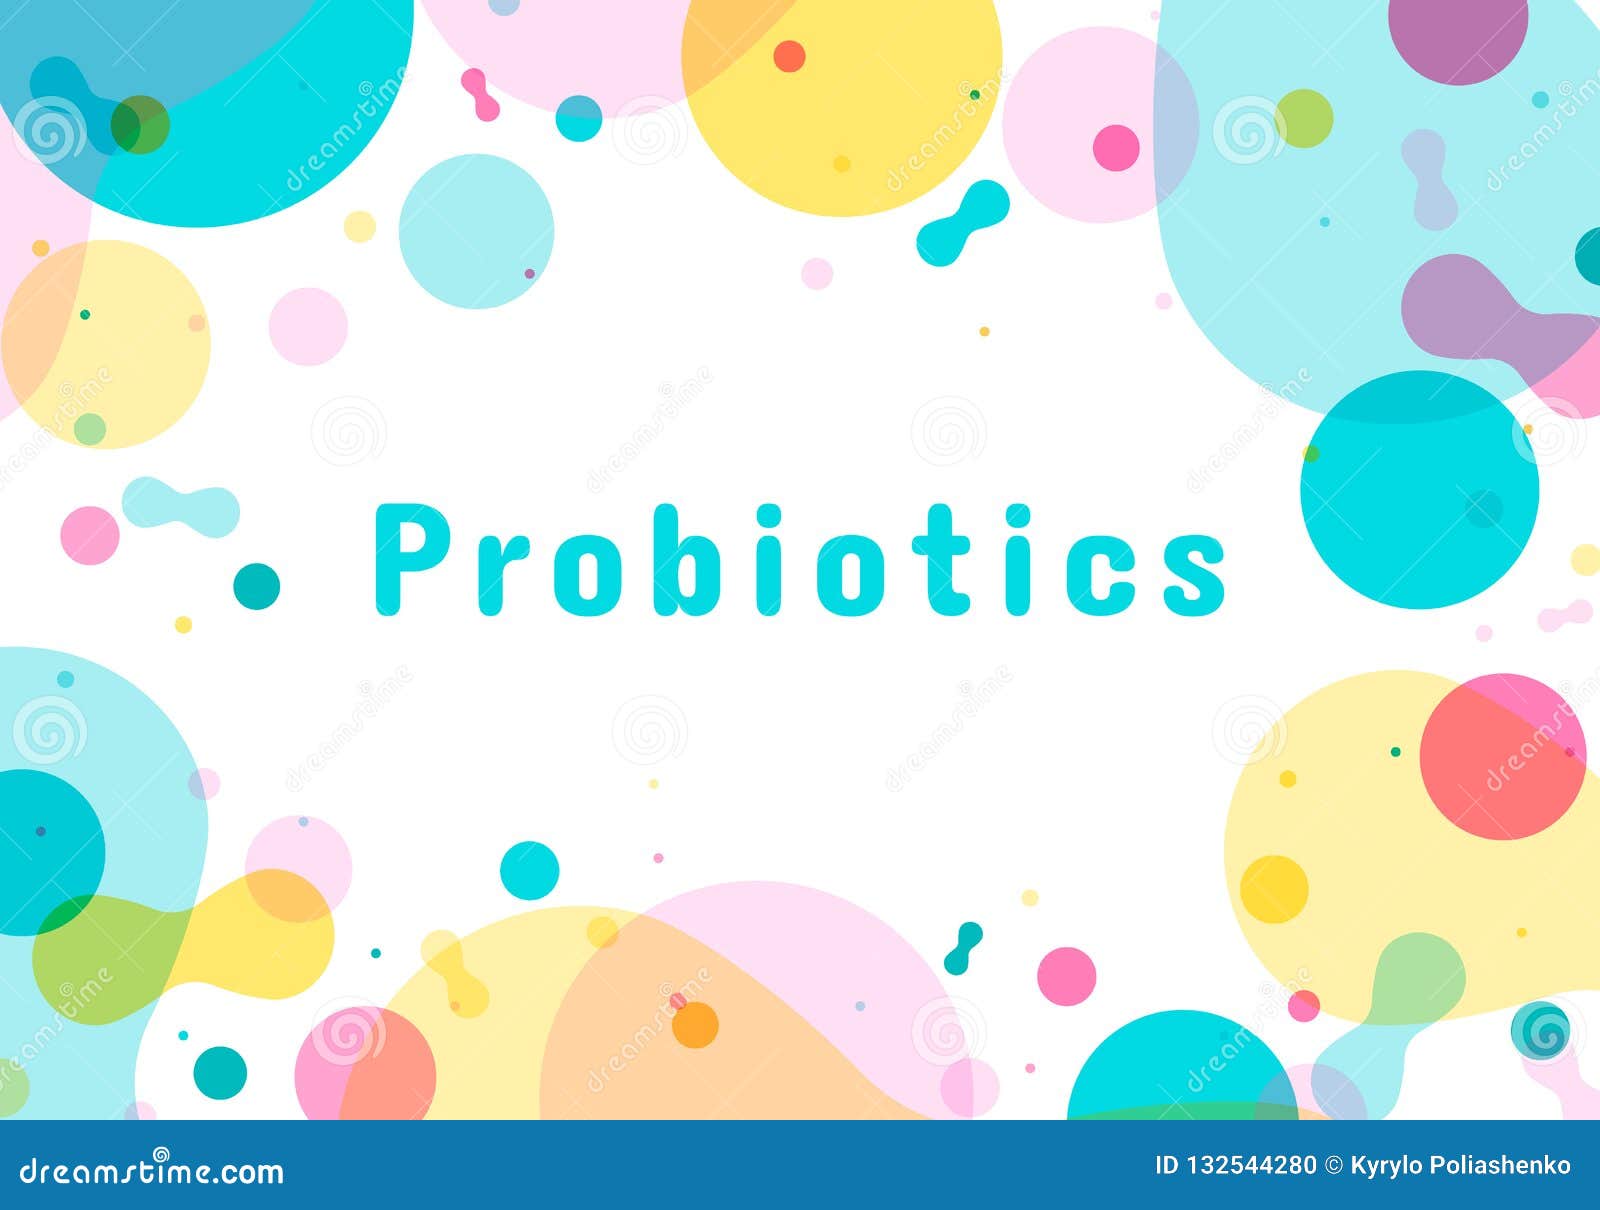 Probiotics bacteria logo. stock illustration. Illustration of